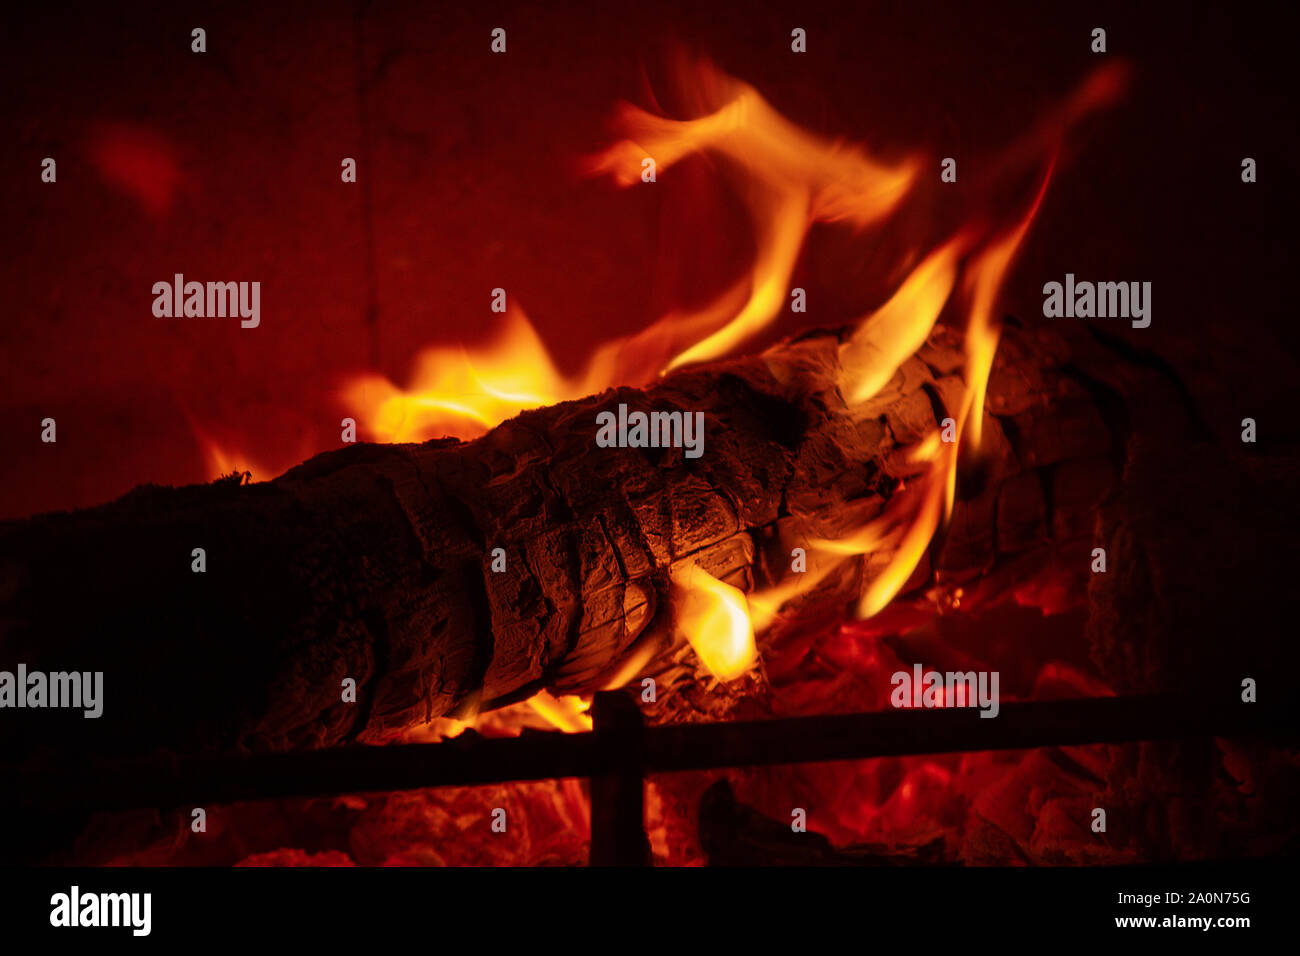 Natural fireplace burning wallpaper. Stock Photo